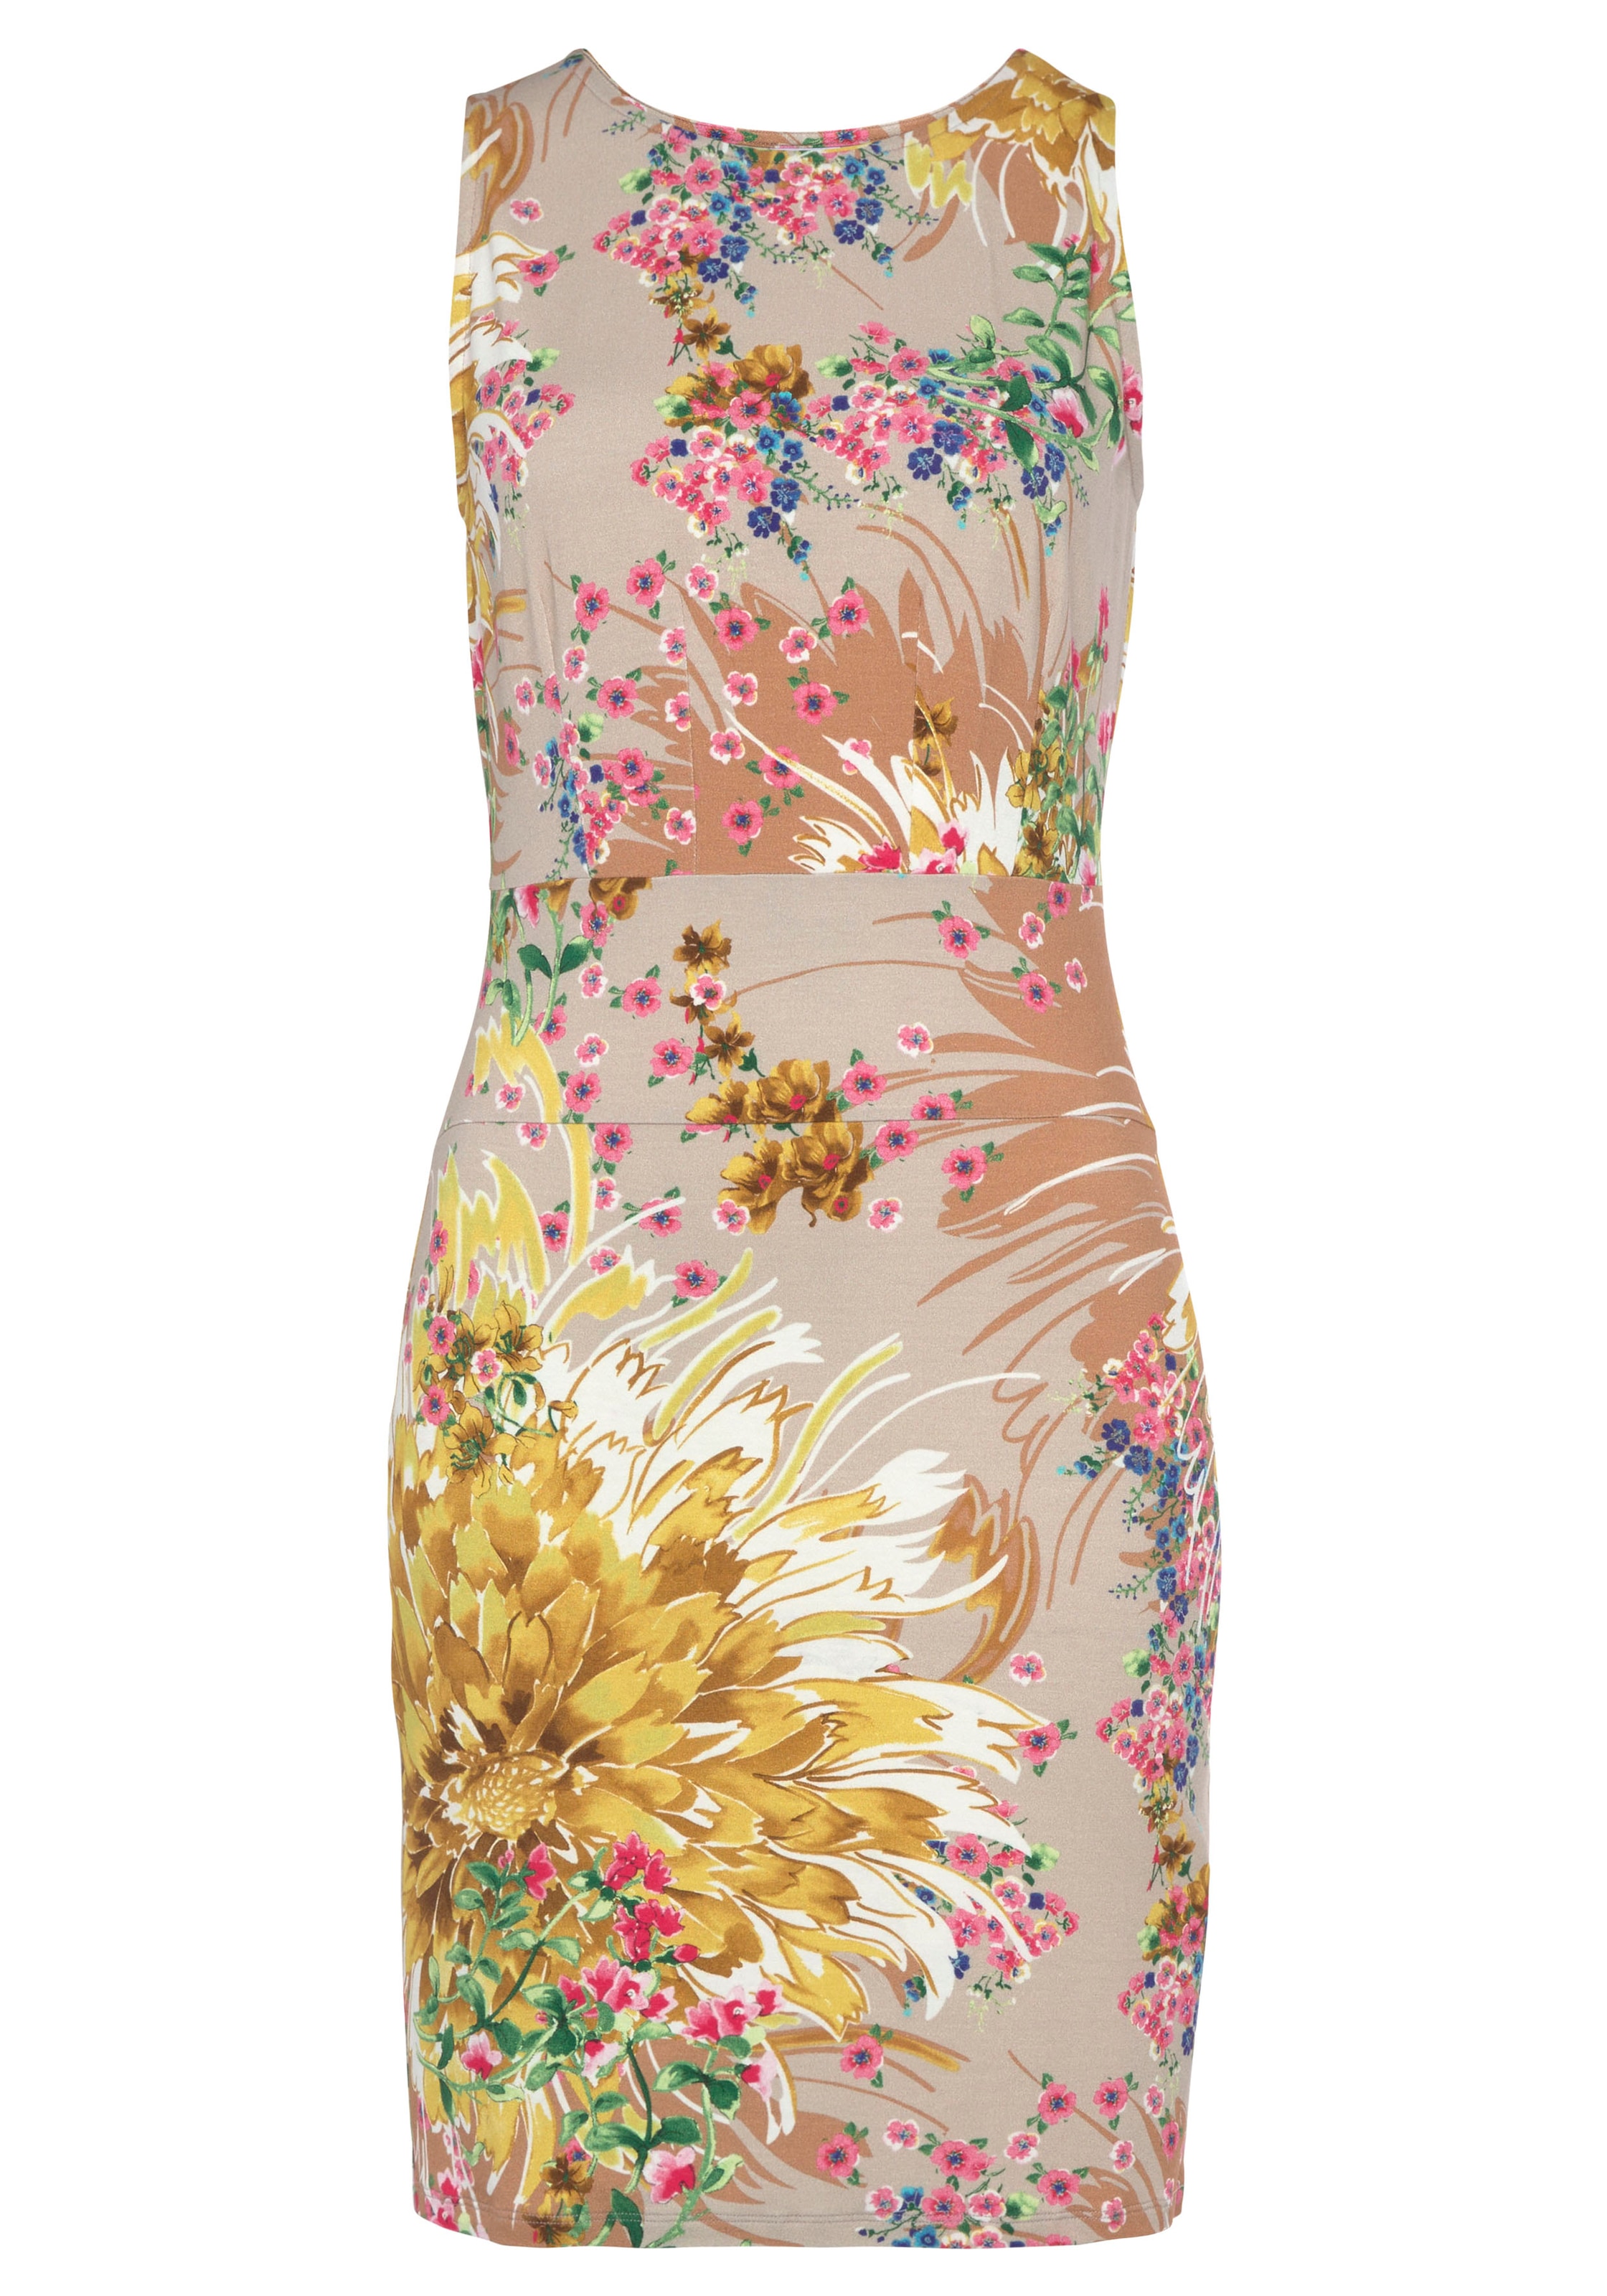 LASCANA Druckkleid, mit Blumendruck, figurbetontes Sommerkleid, Minikleid